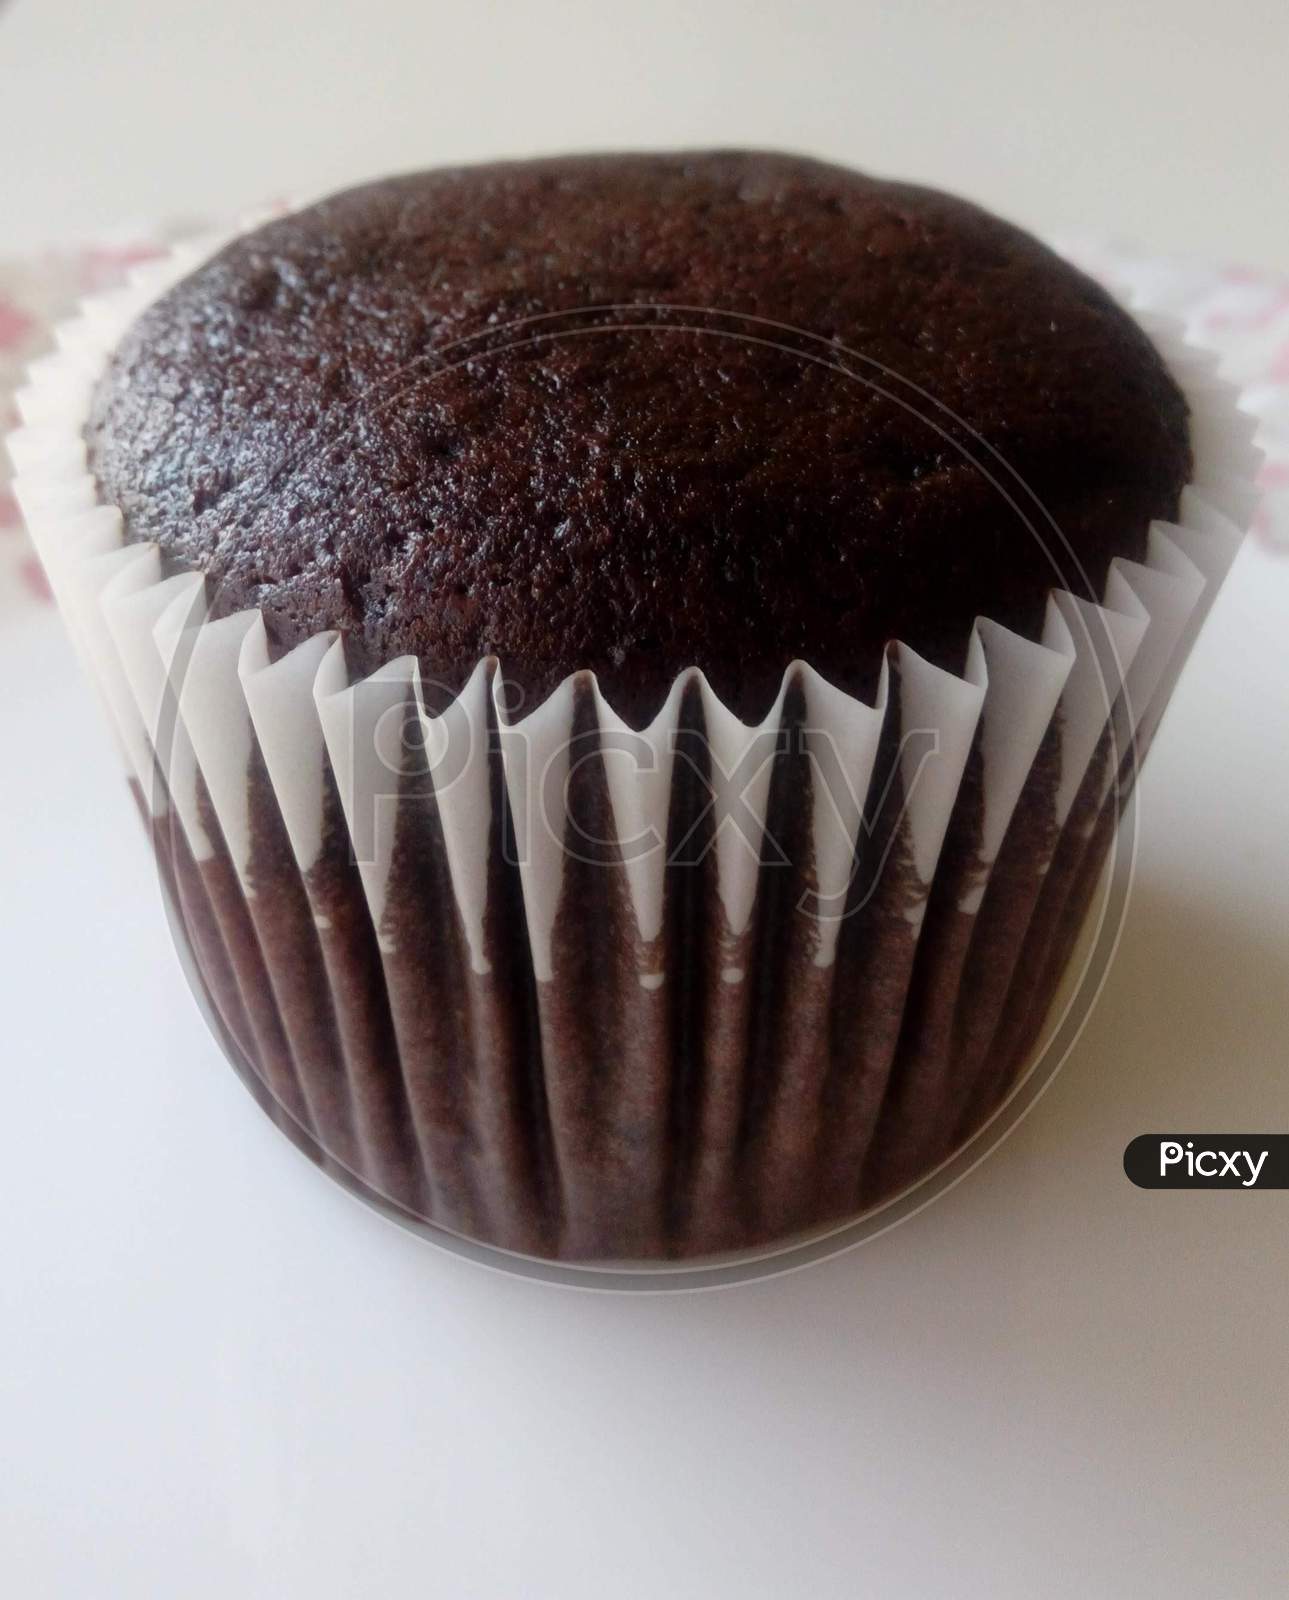 Delicious chocolate cupcake